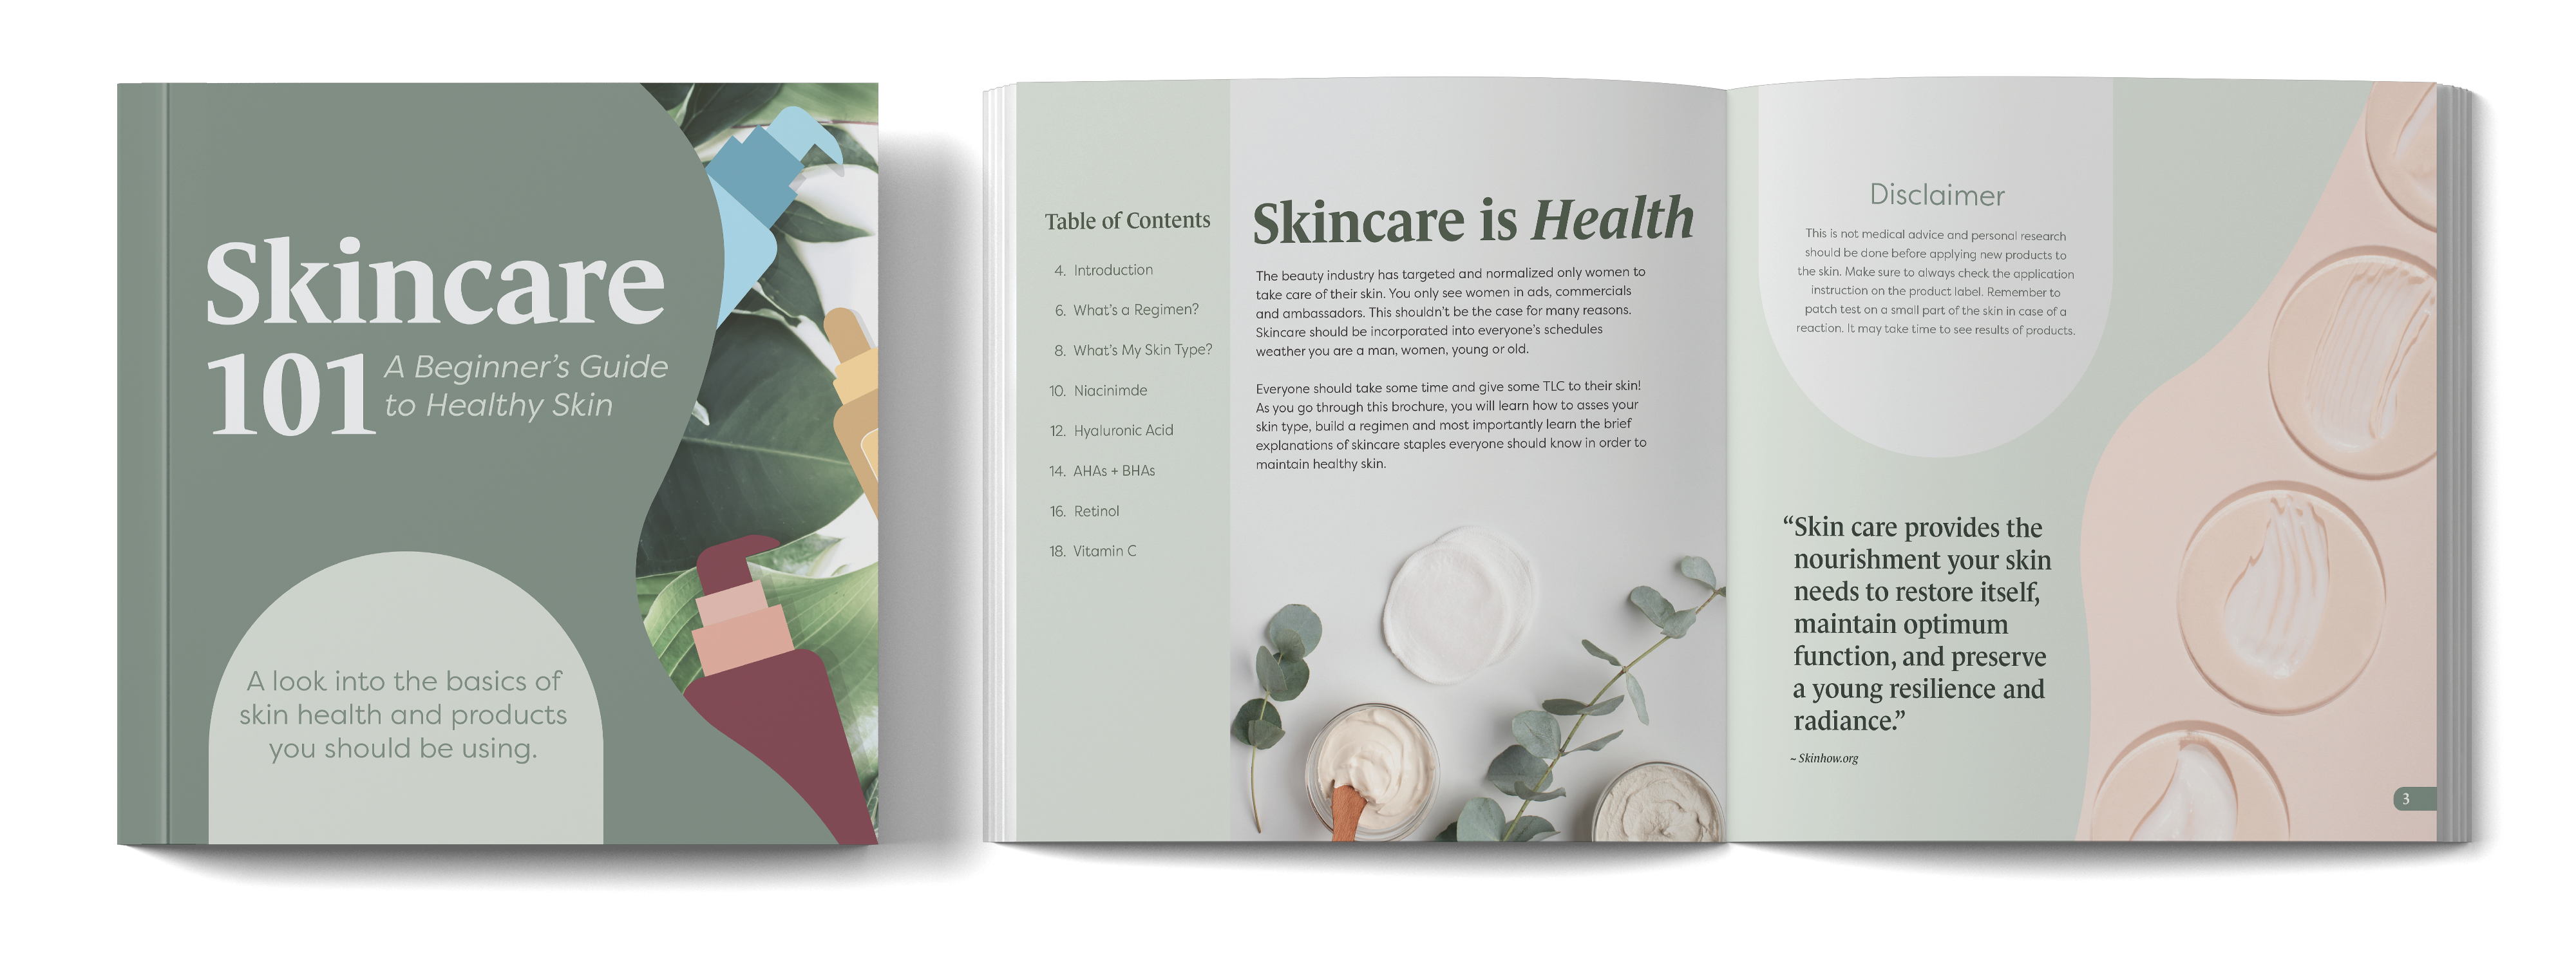 Skincare 101 brochure mockup